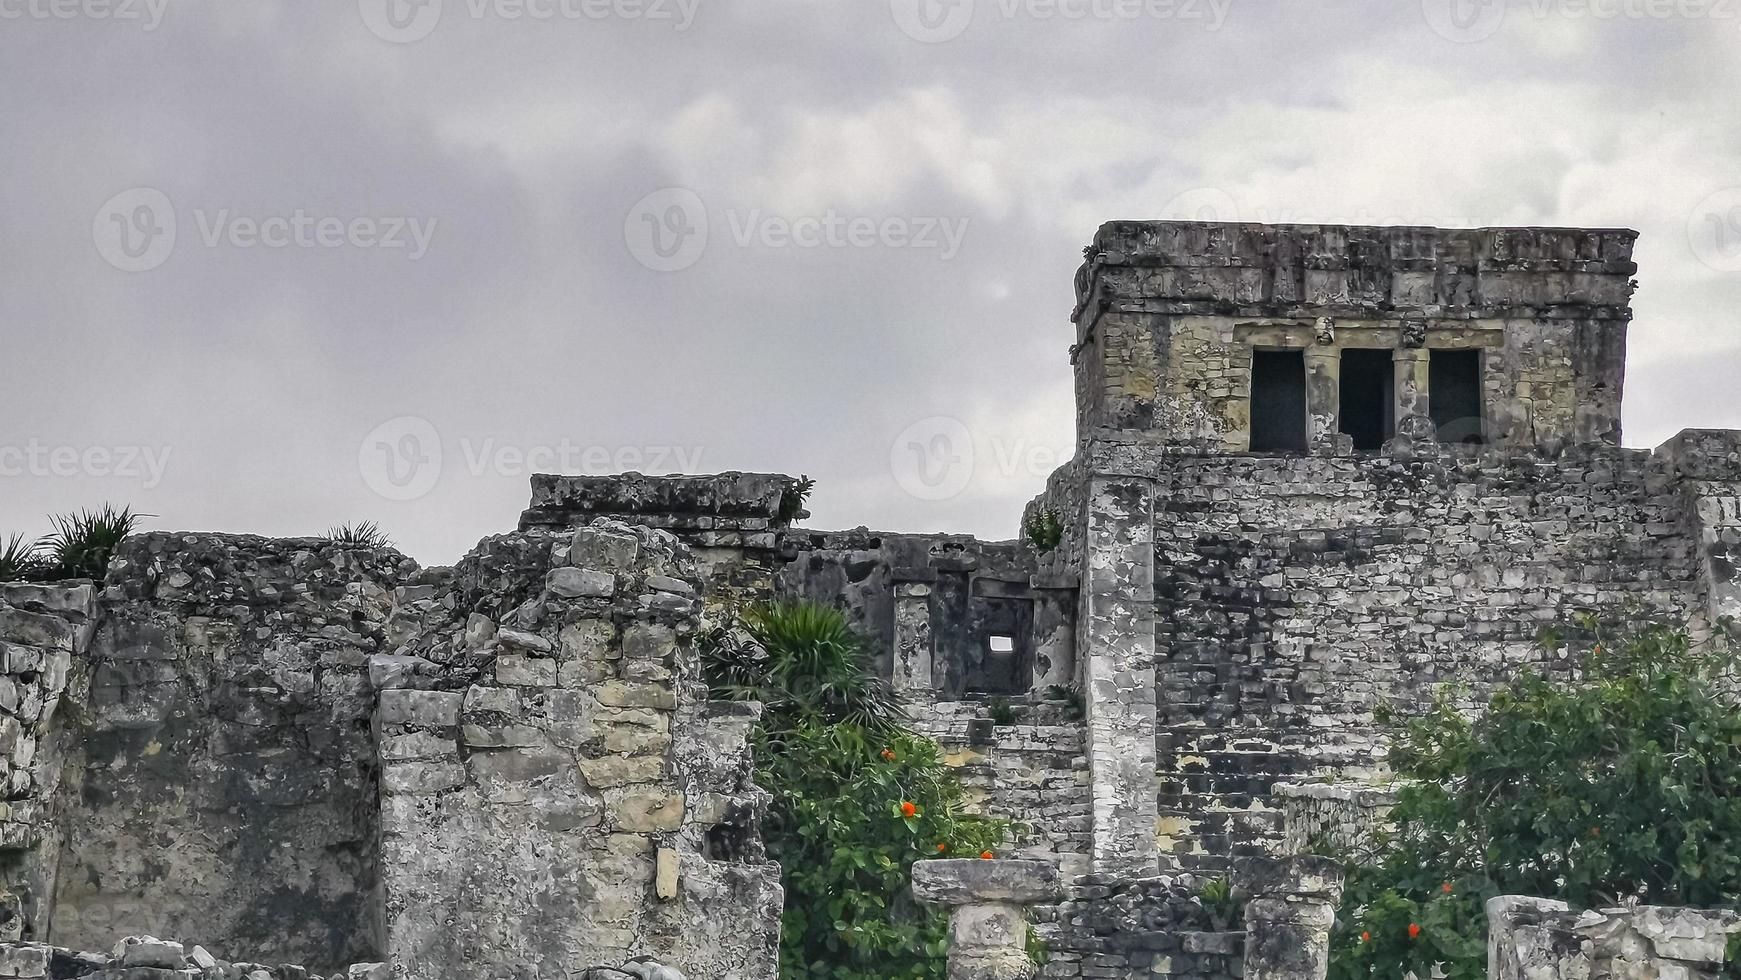 oude tulum ruïnes Maya site tempel piramides artefacten zeegezicht mexico. foto